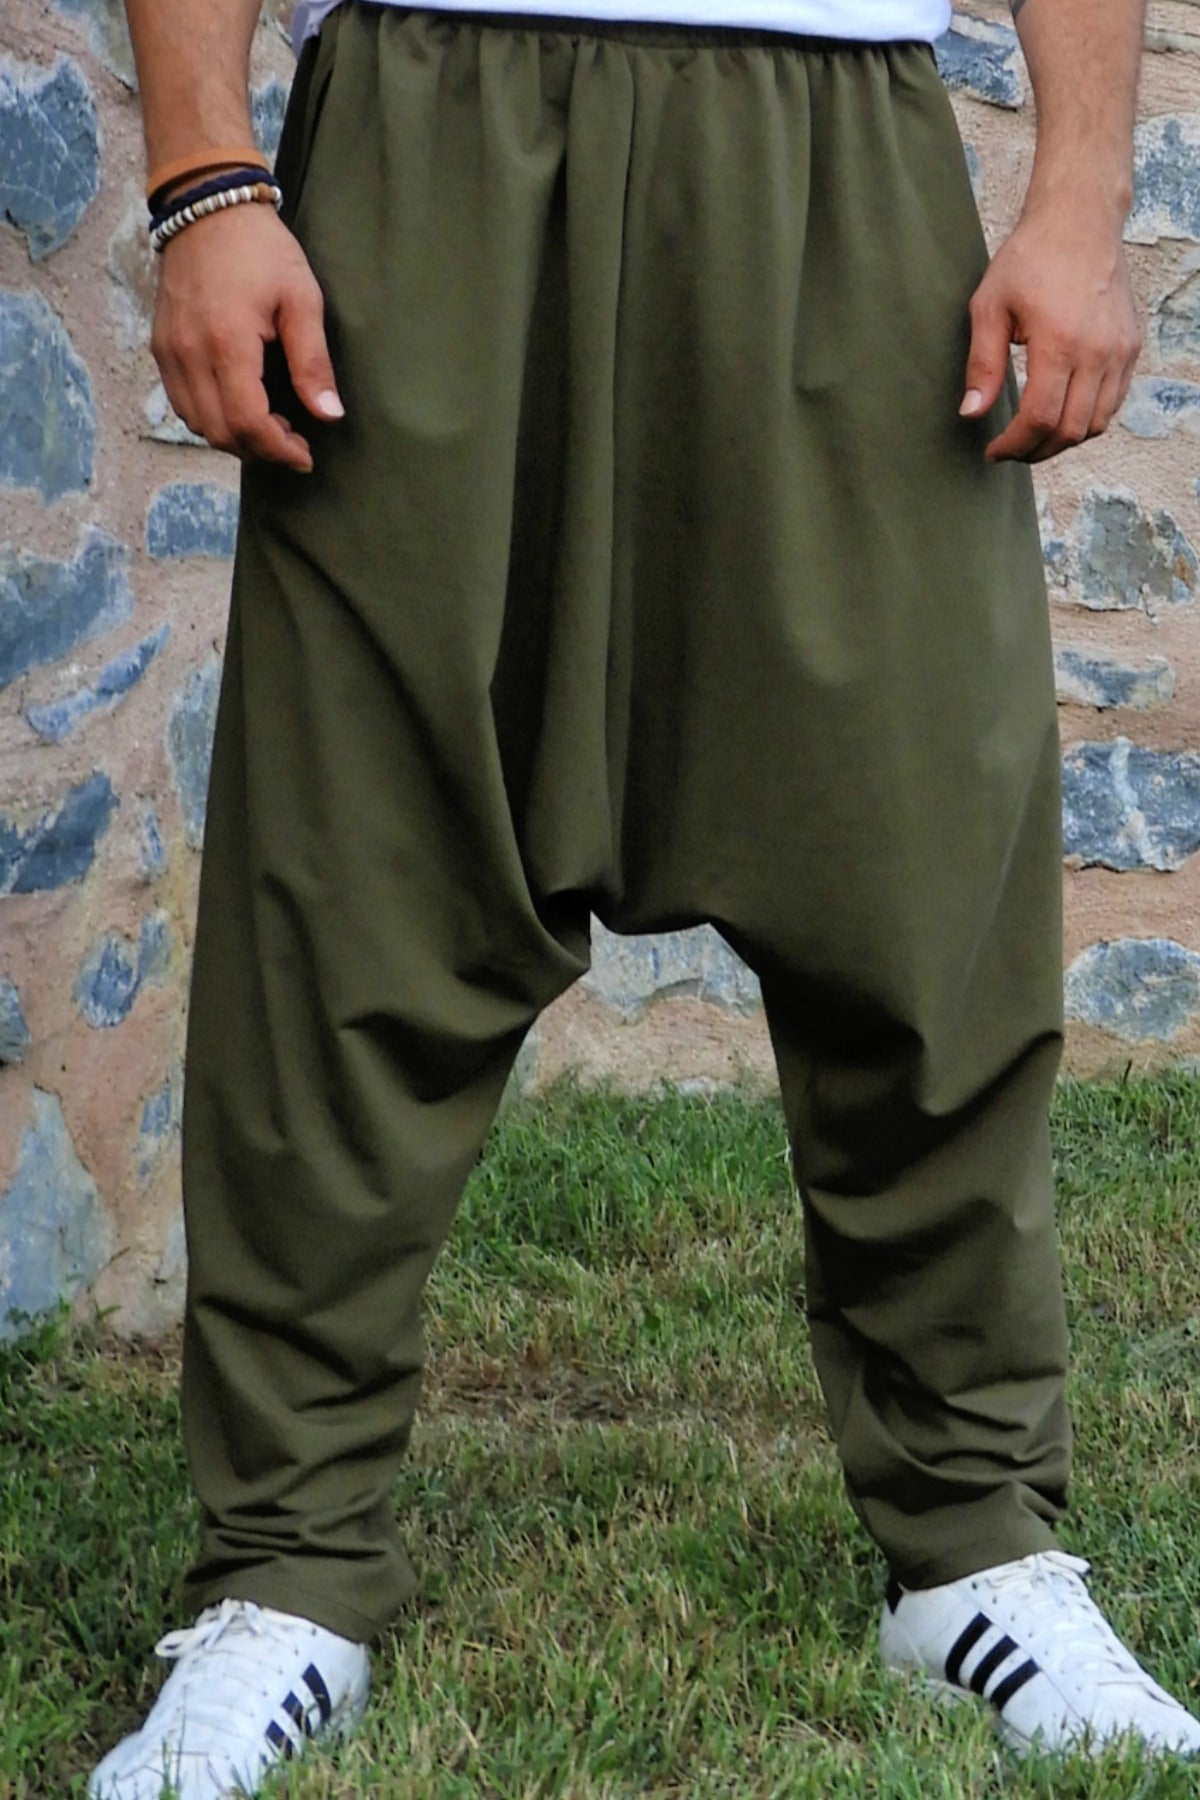 Odana's | SNOW Men's Harem Pants For Winter (Black, Green) Green | Harem Pants | Sustainable Fashion